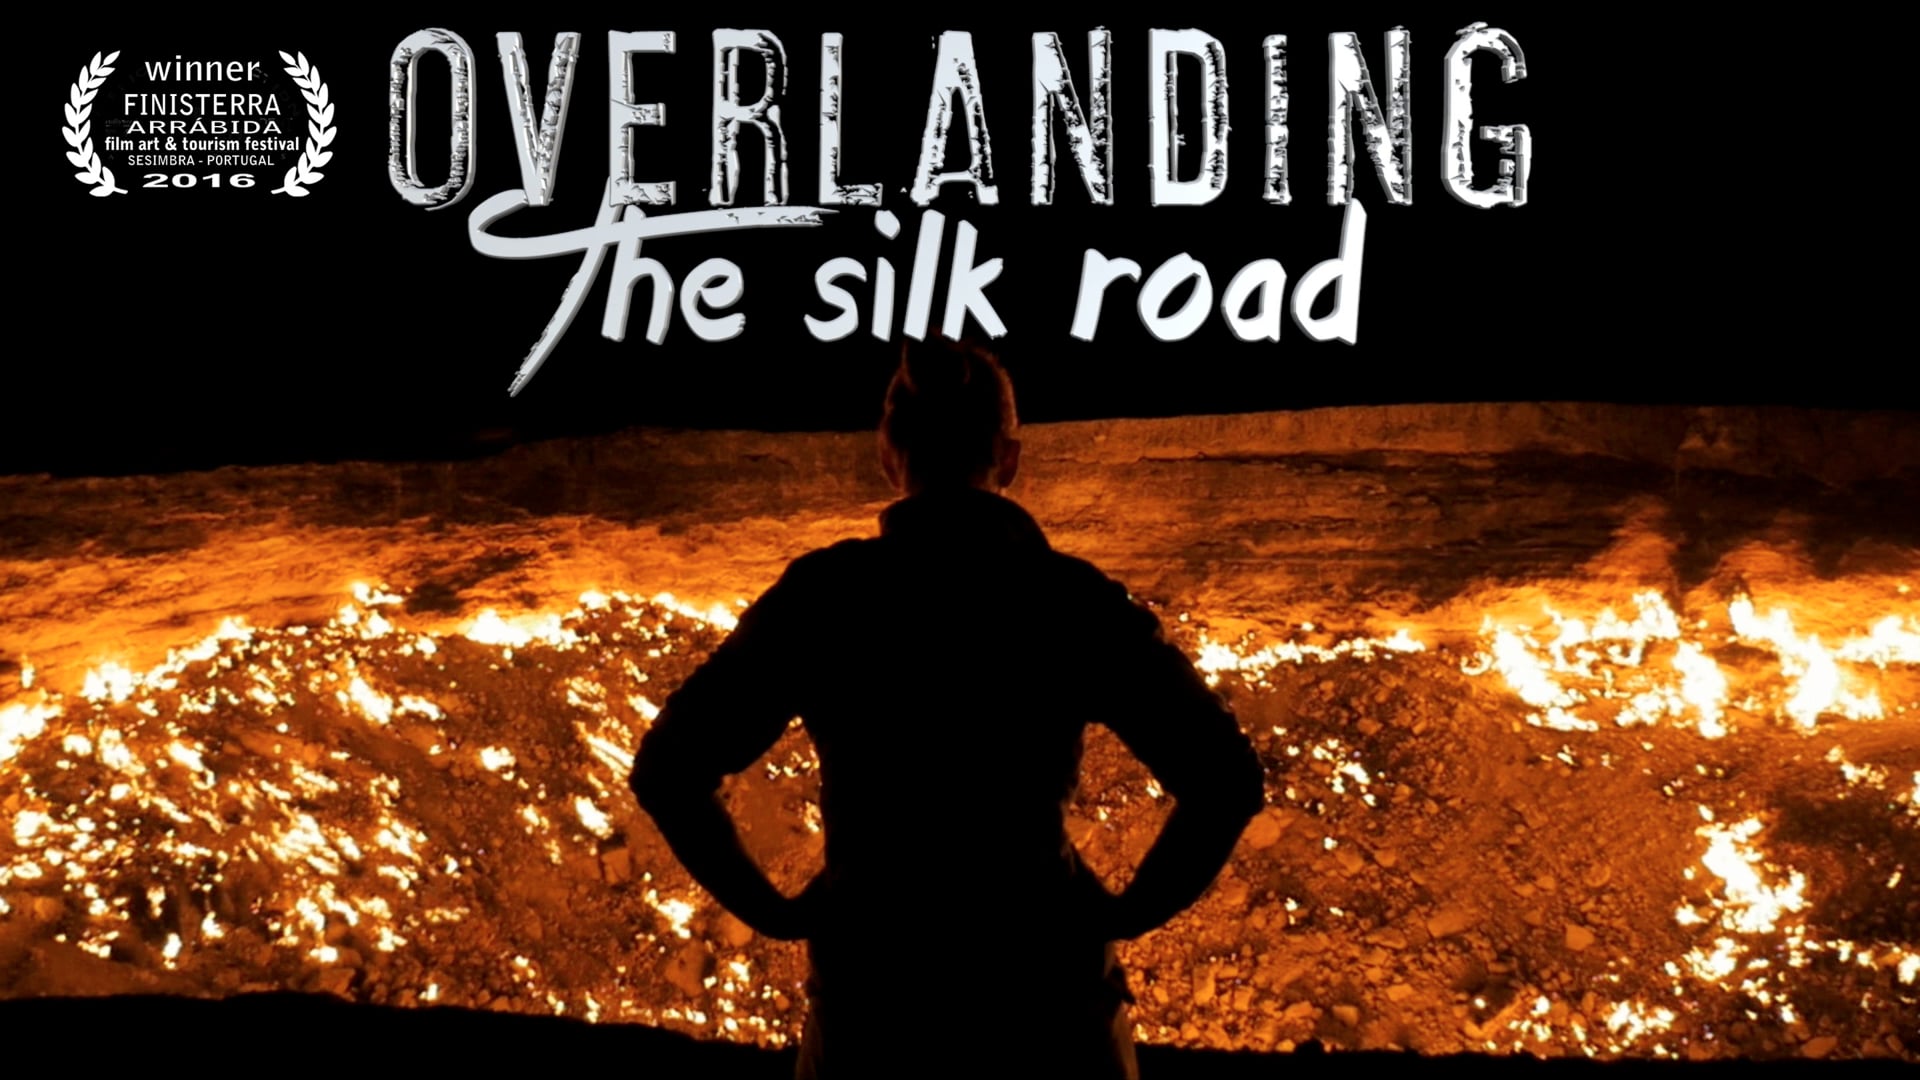 Overlanding the Silk Road